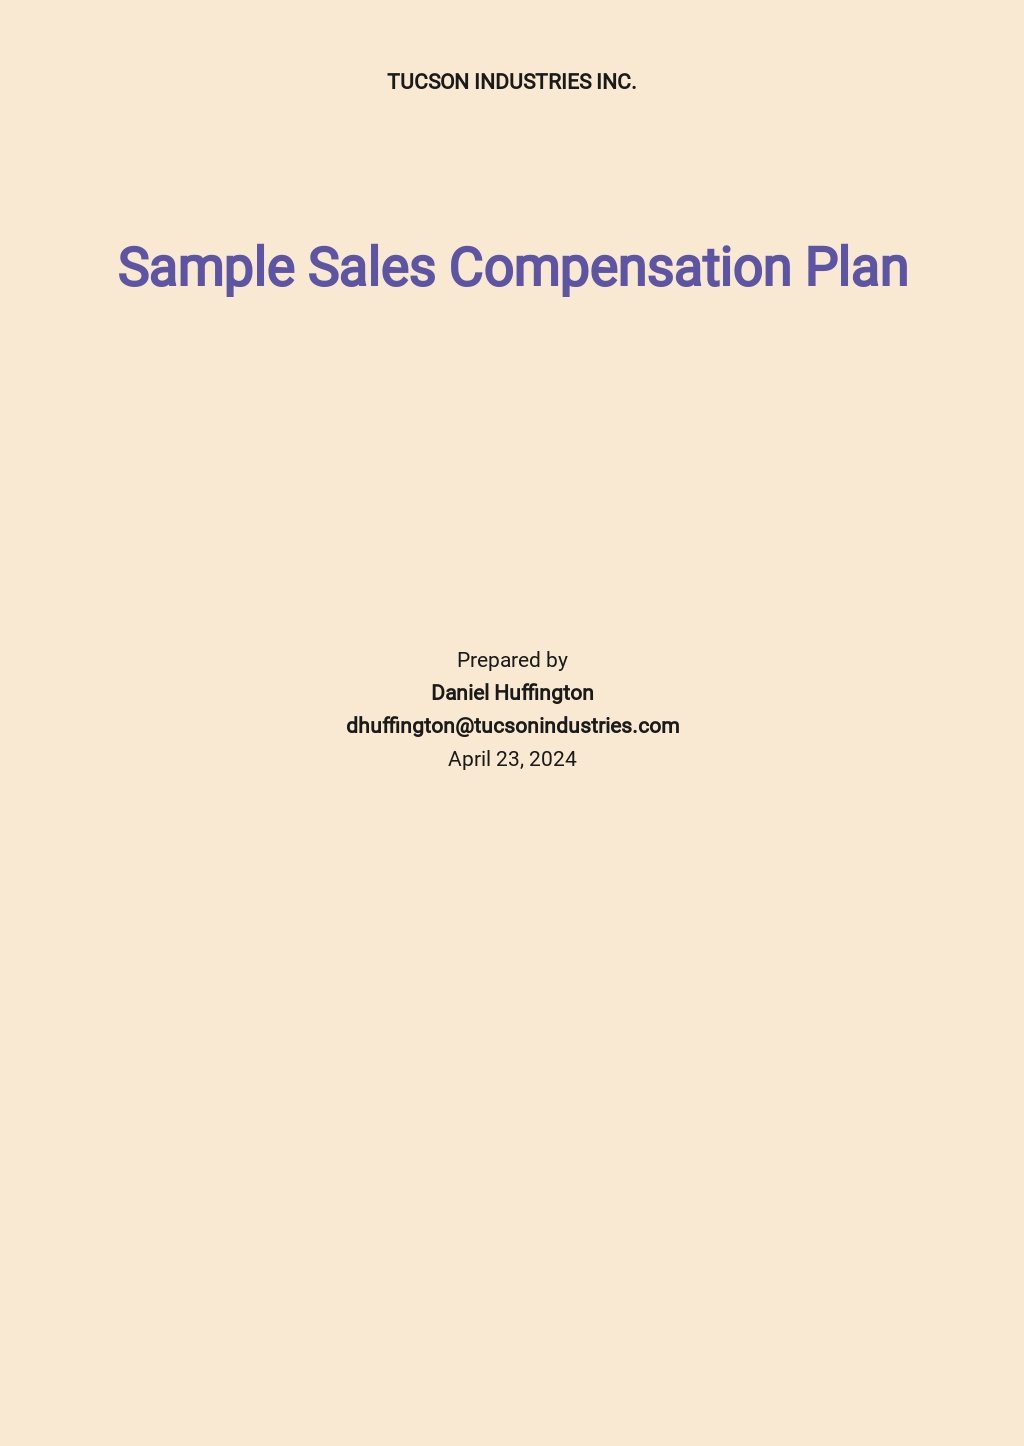 Sample Sales Compensation Plan Template.jpe